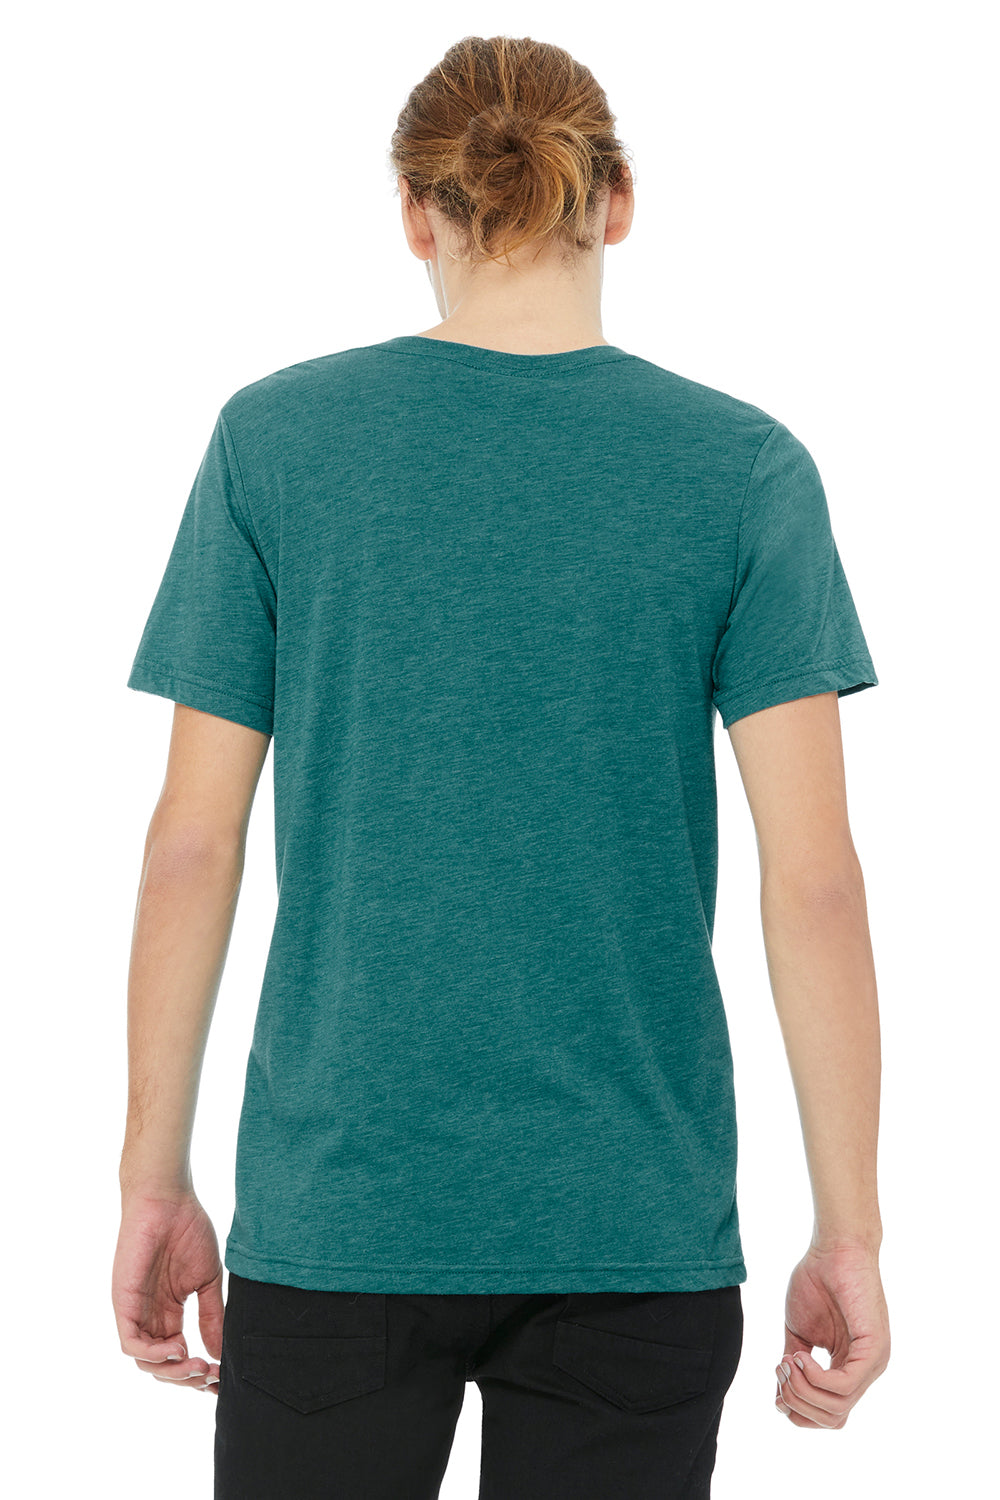 Bella + Canvas BC3415/3415C/3415 Mens Short Sleeve V-Neck T-Shirt Teal Green Model Back